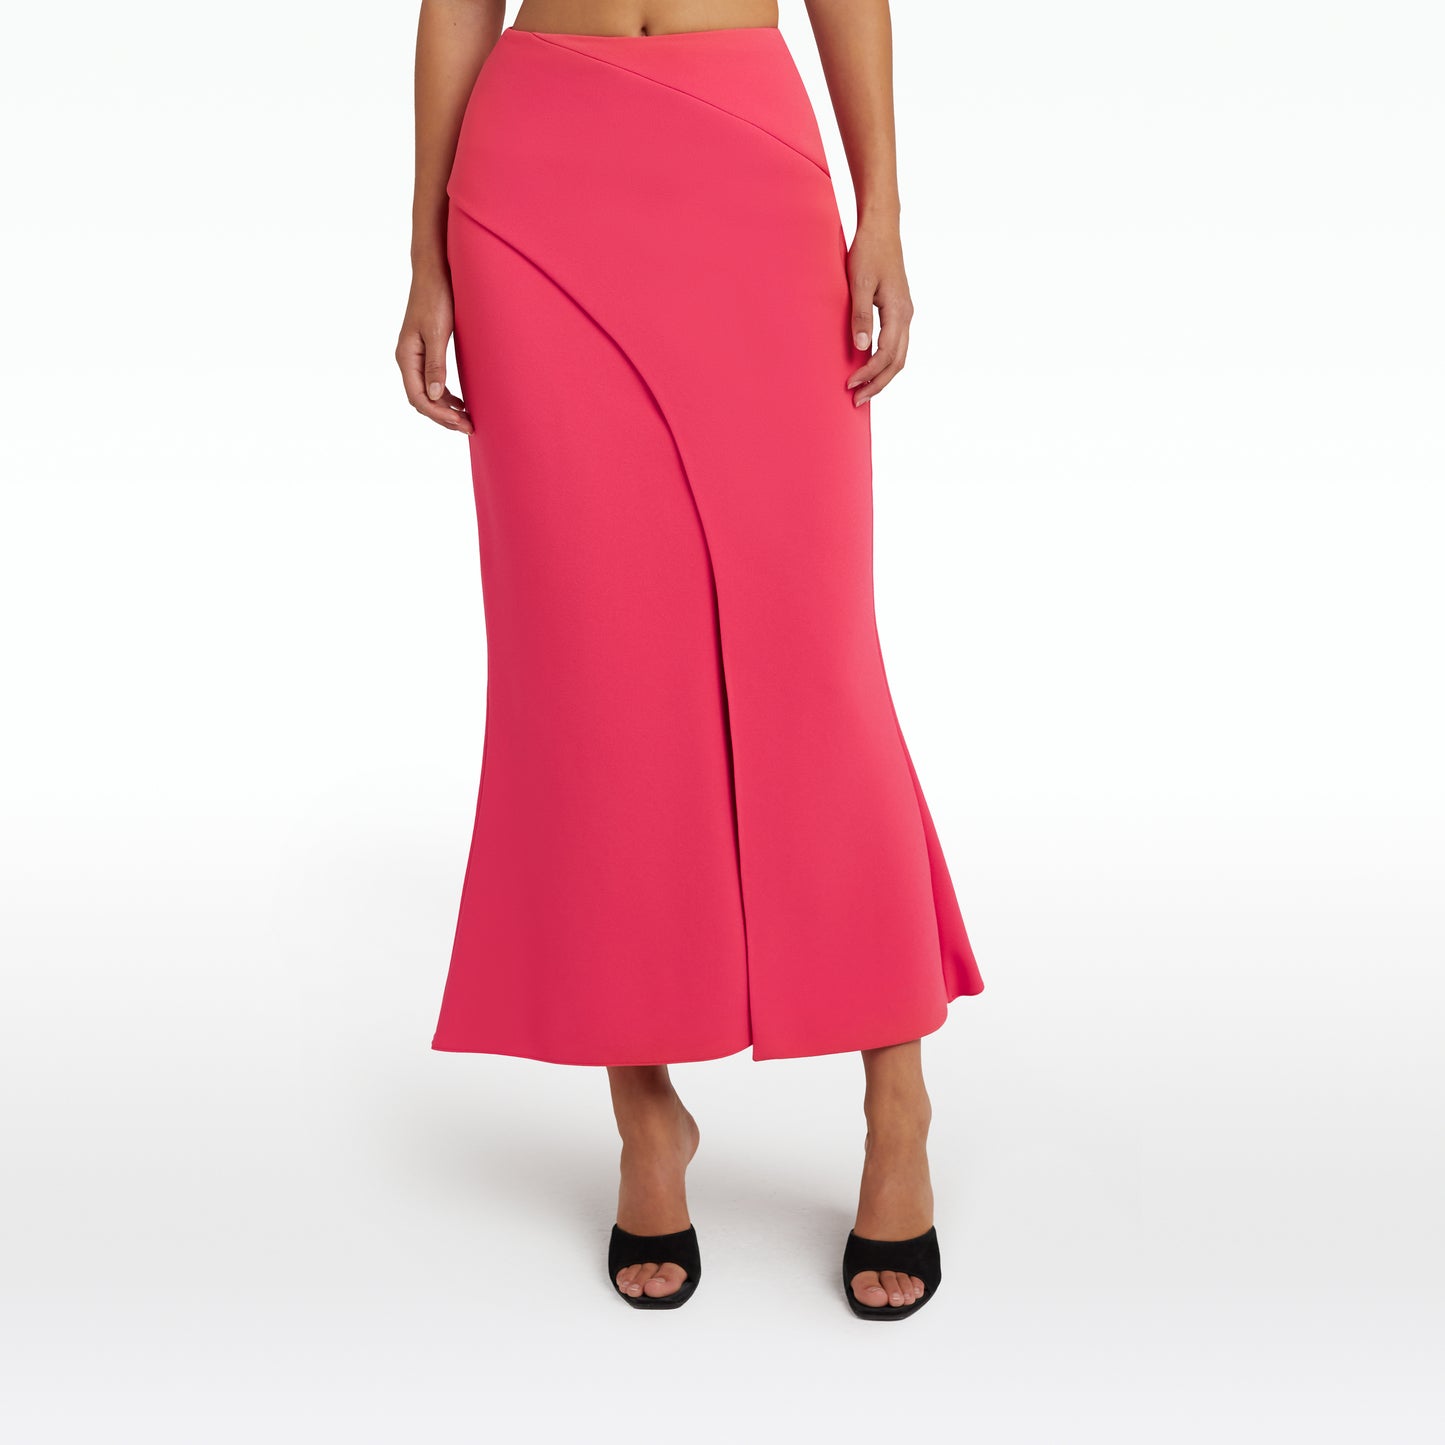 Zenni Grenada Skirt